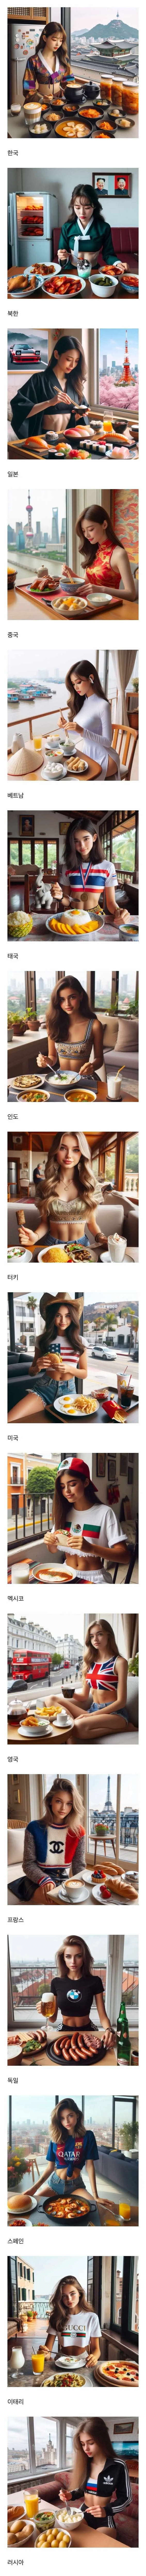 Ai가 그린 아침 식사하는 각국 여성 | mbong.kr 엠봉